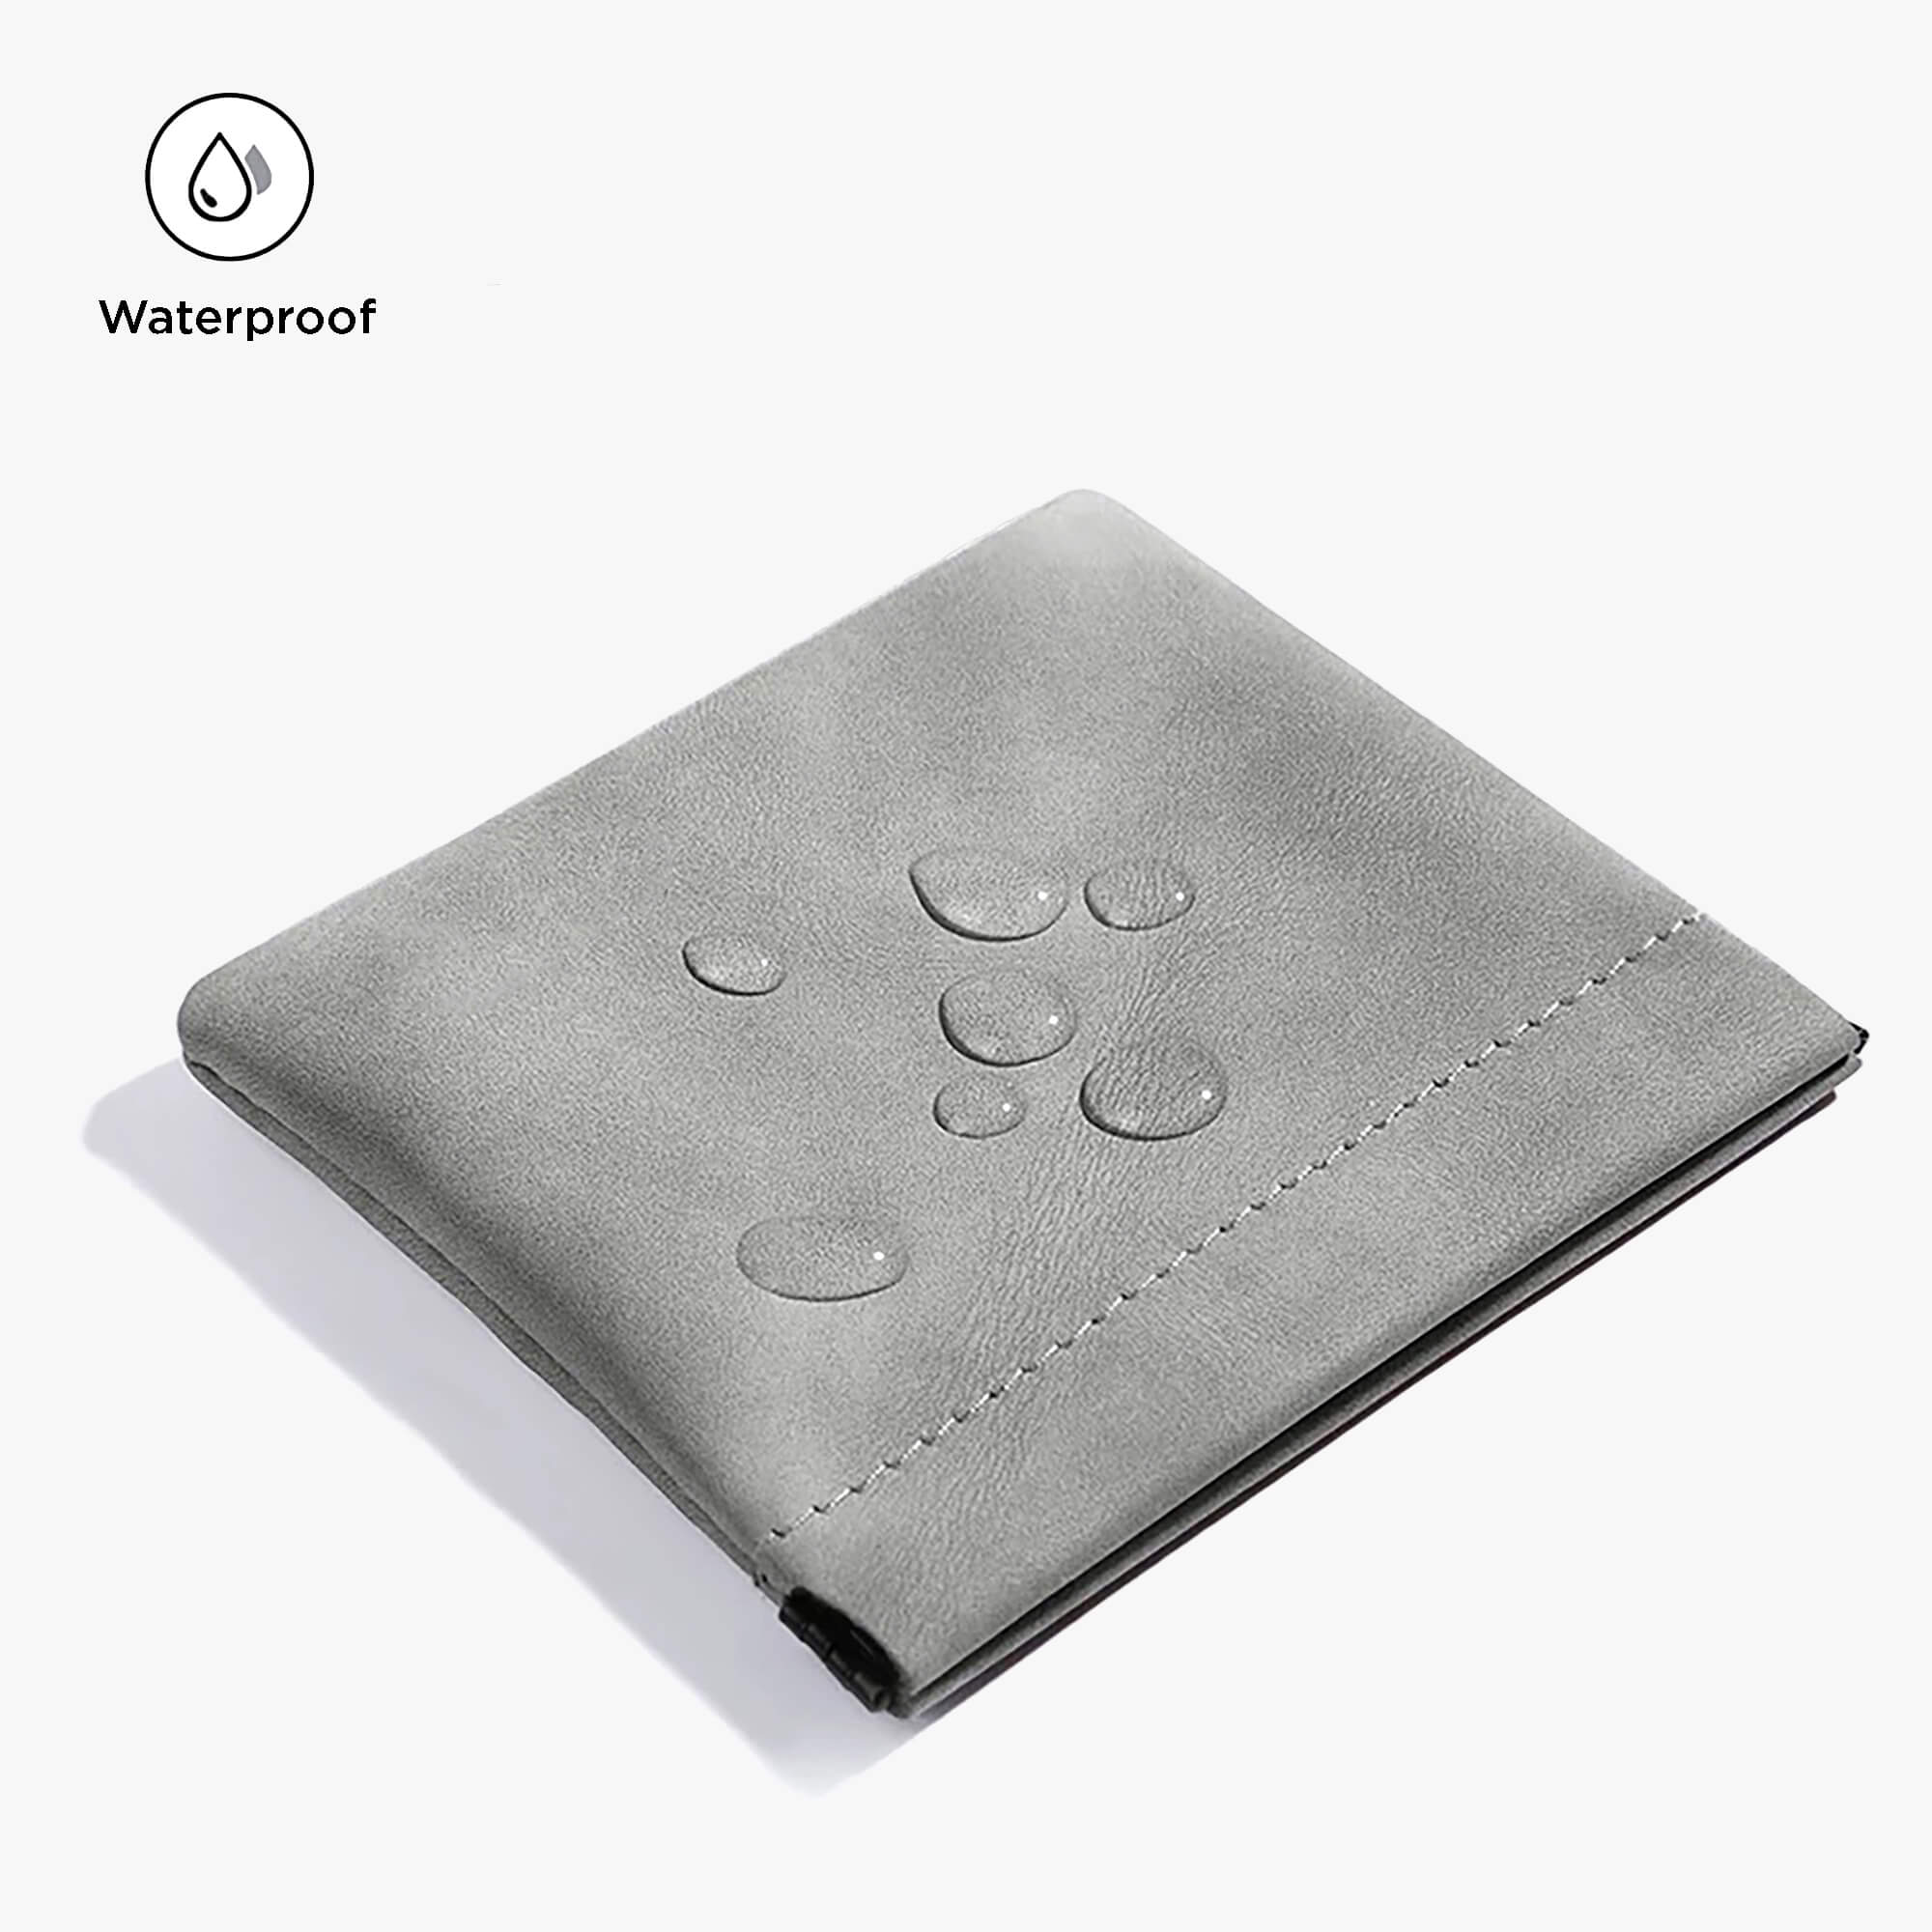 Earphones Carry Snap Leather Pouch - Waterproof Design